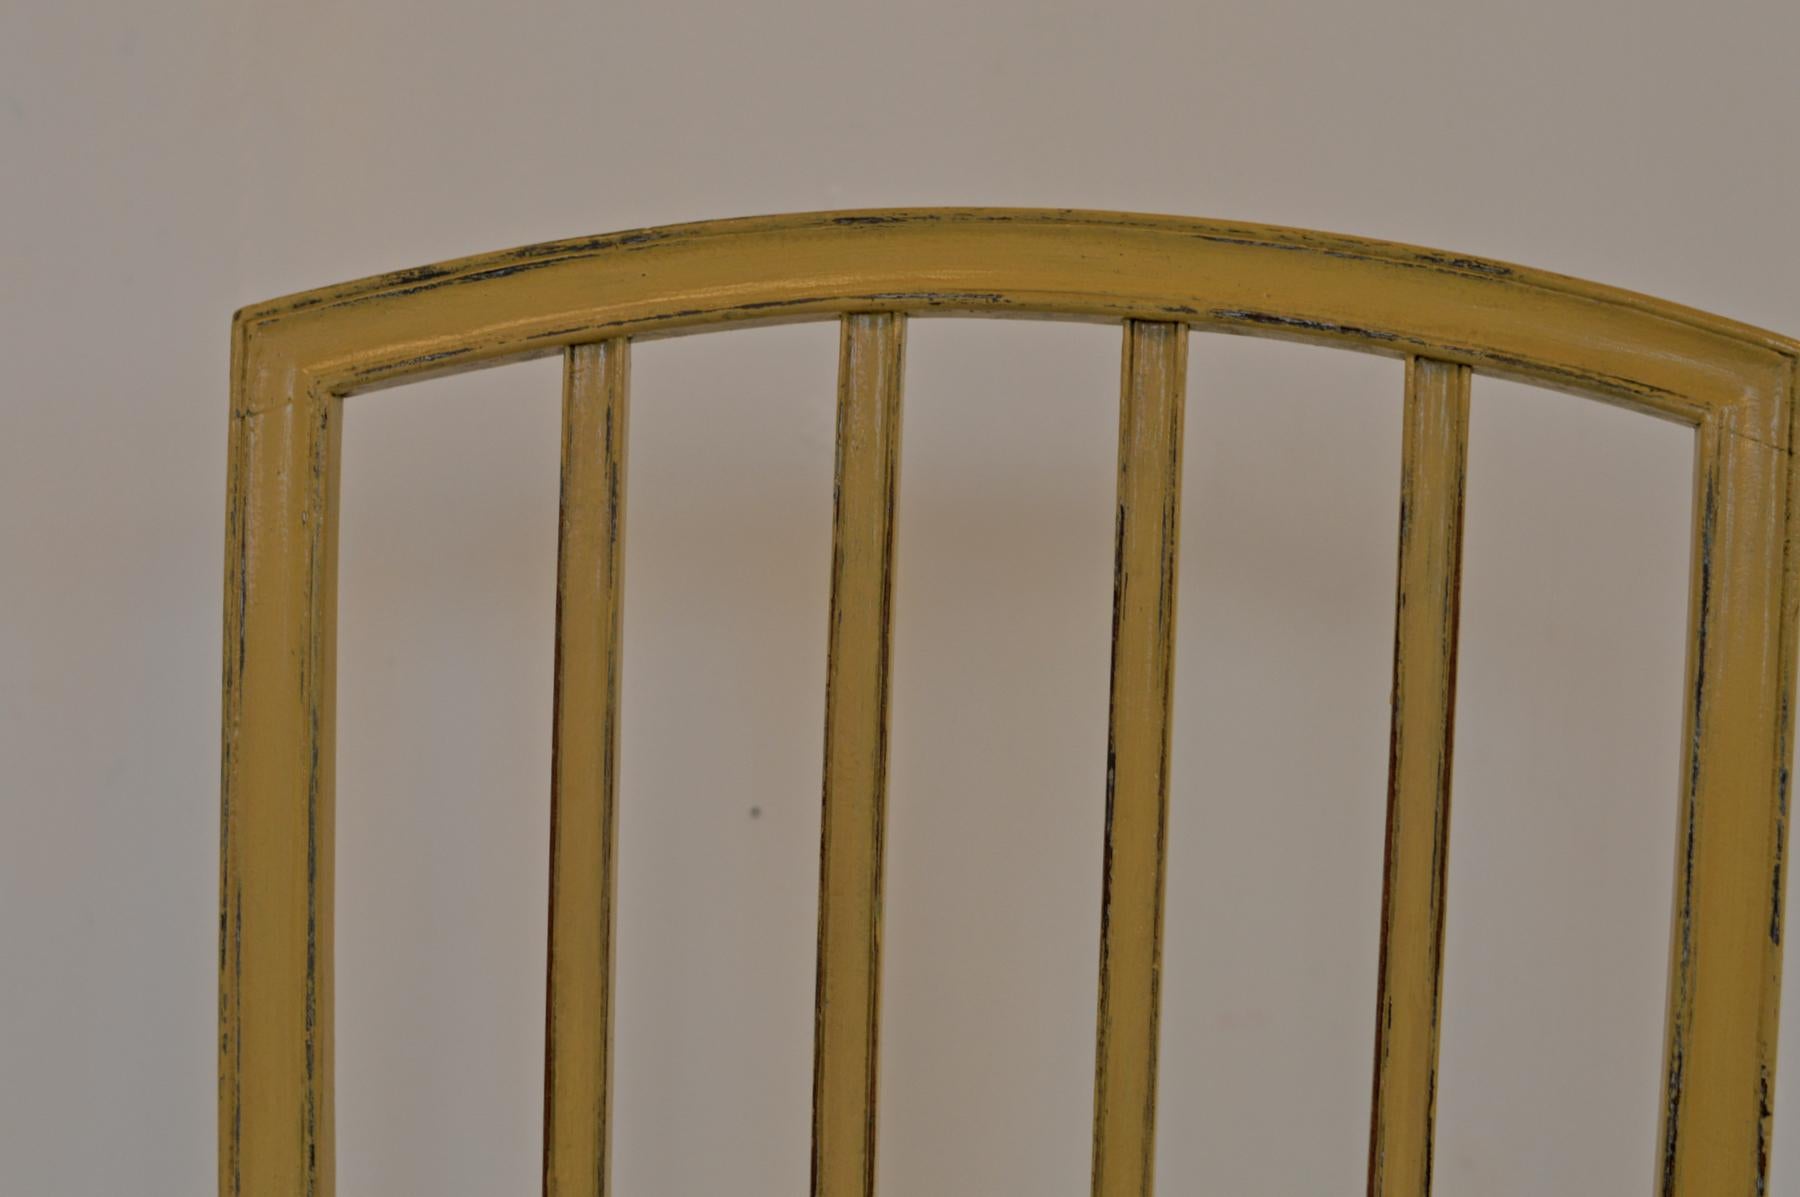 English Country House Hepplewhite Chairs in Churlish Green, Set of 6 8